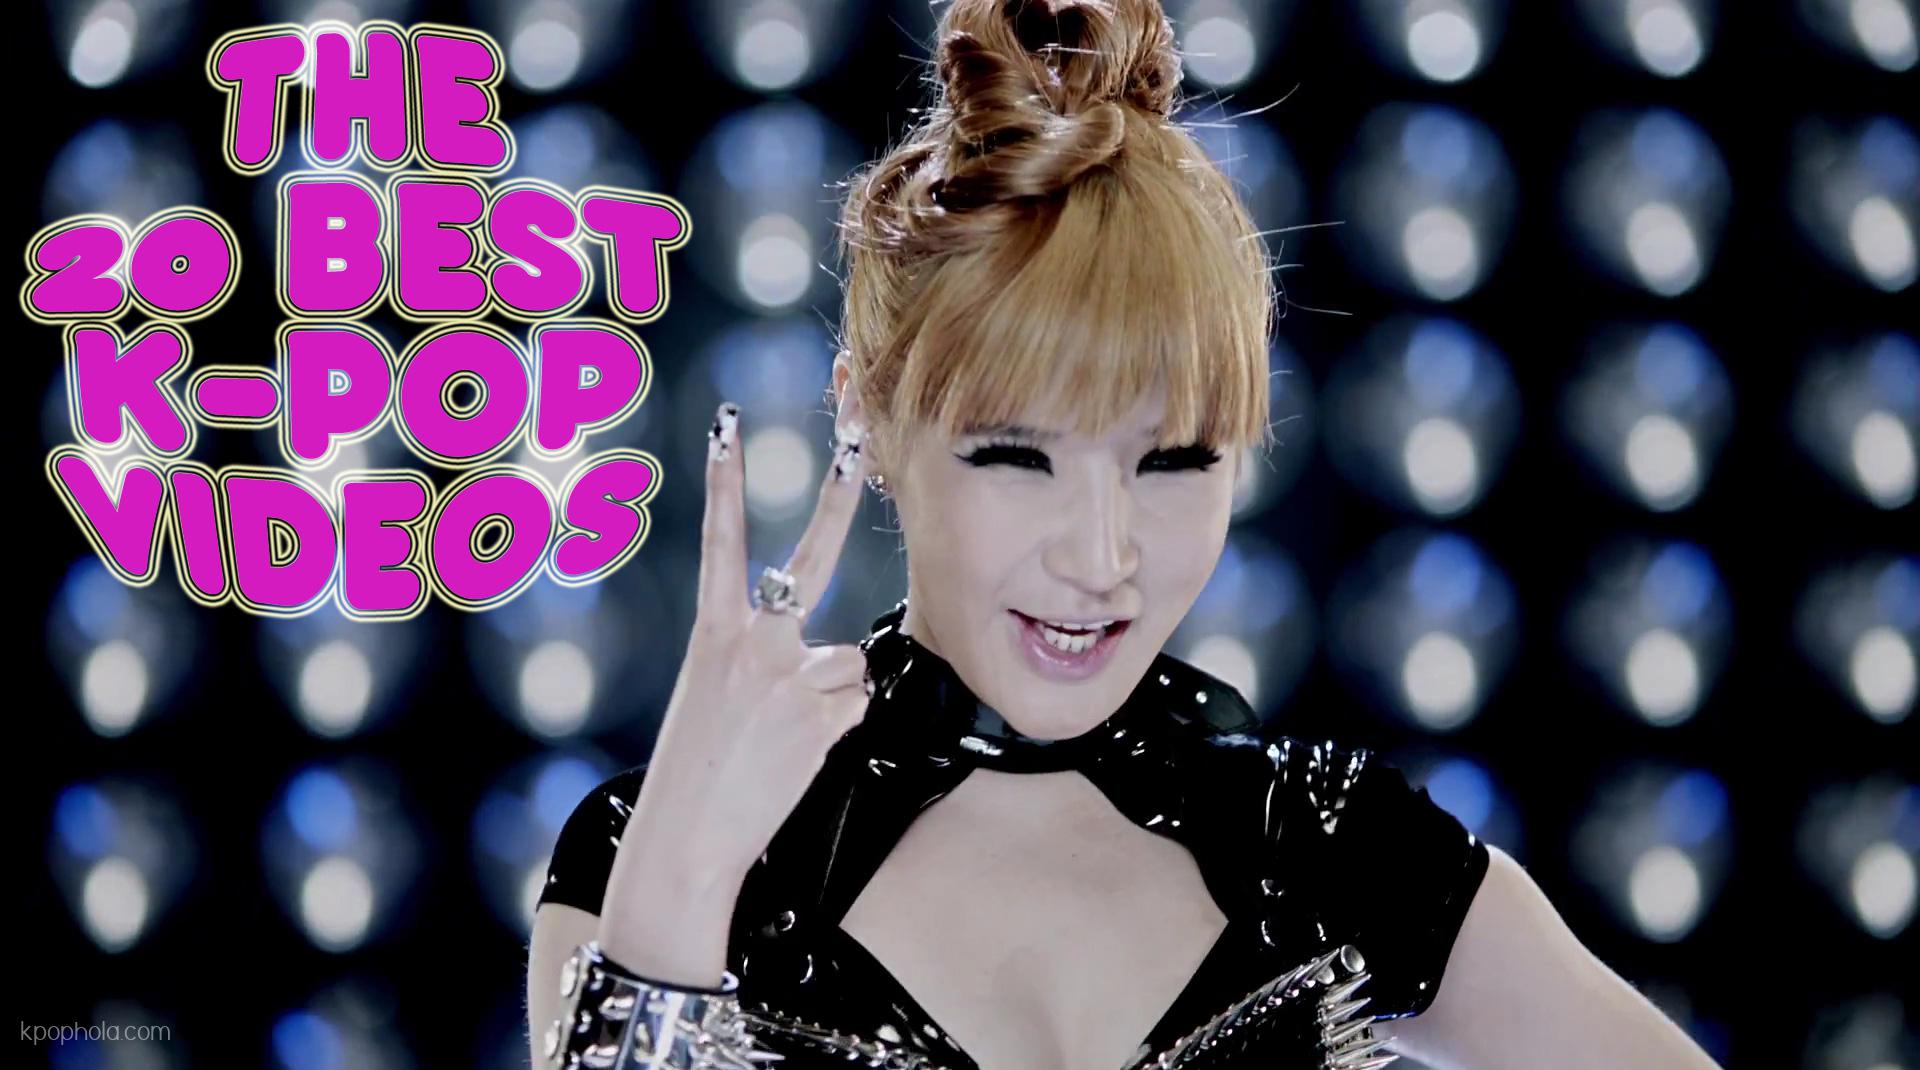 The 20 Best K-Pop Videos